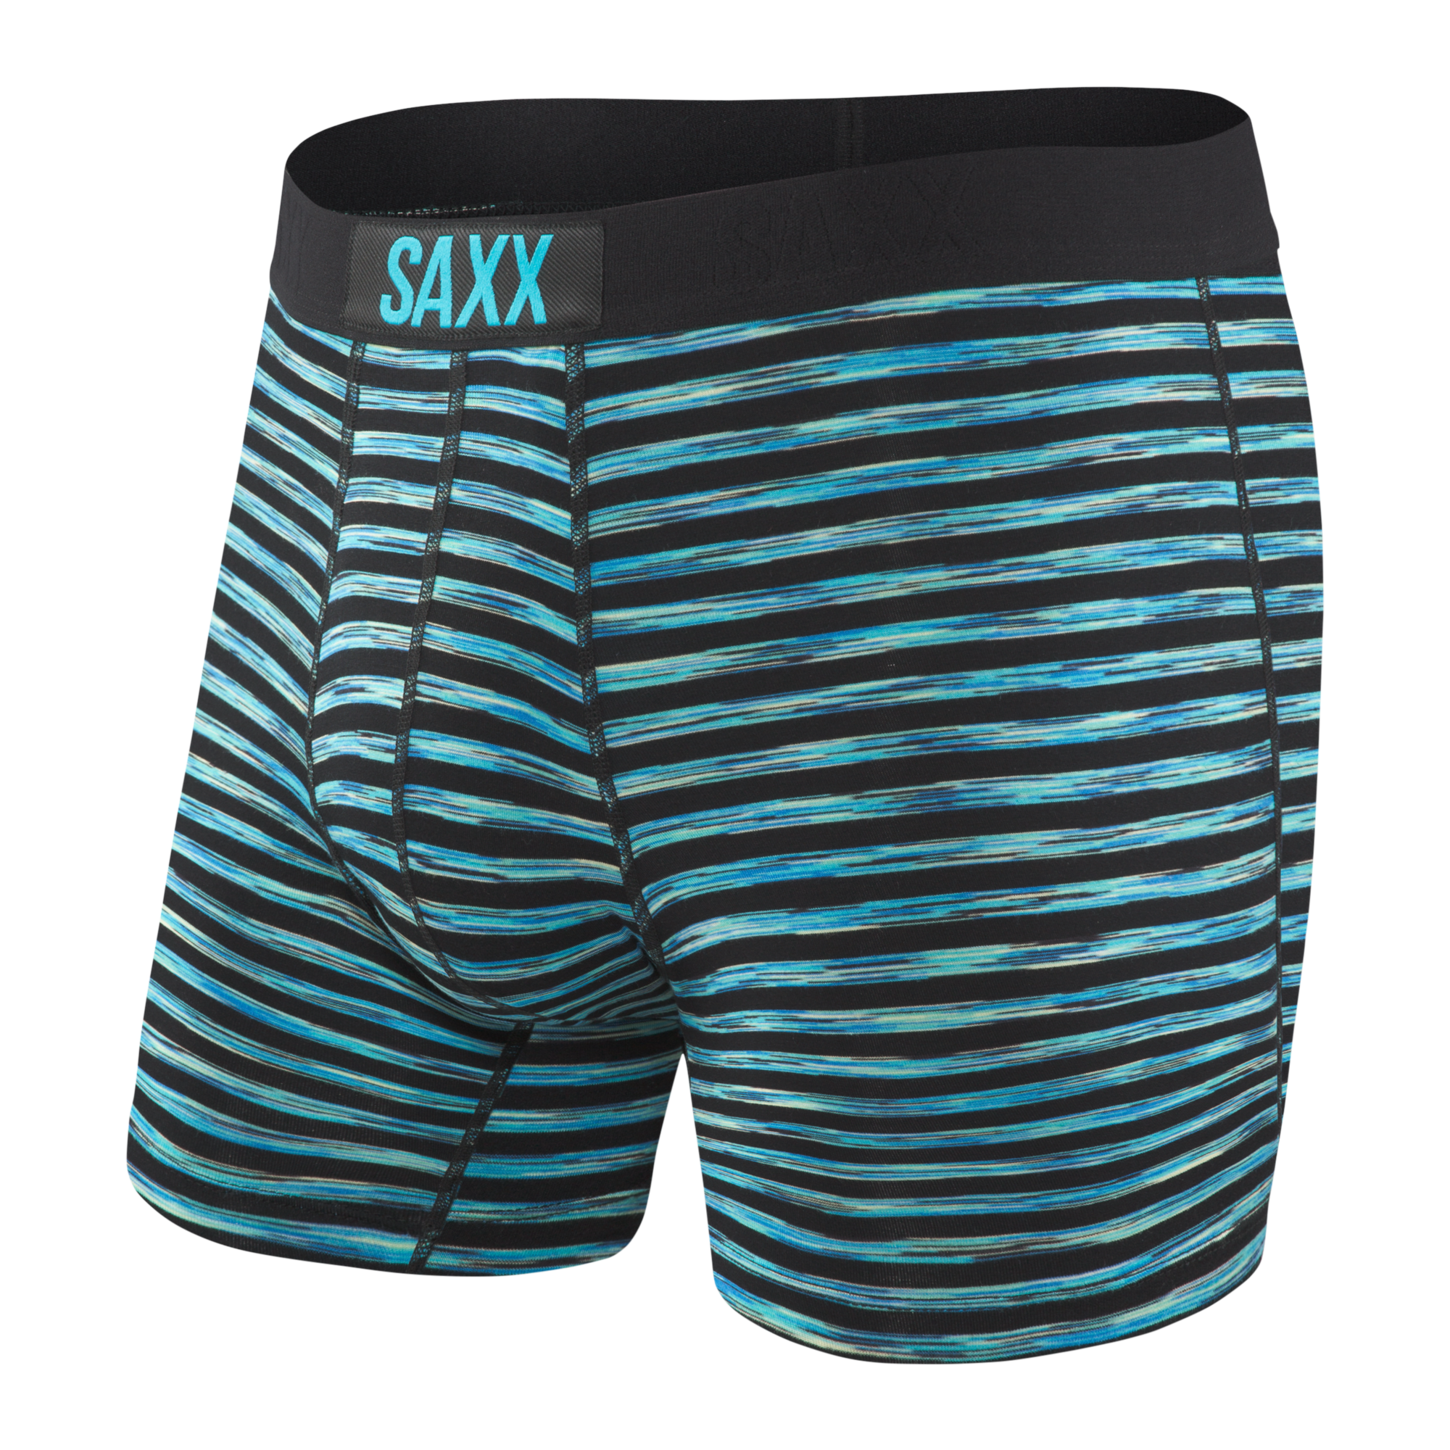 Vibe Super Soft Jersey Boxer Brief in Multi Championship Stripes by SAXX  Underwear Co. - Hansen's Clothing